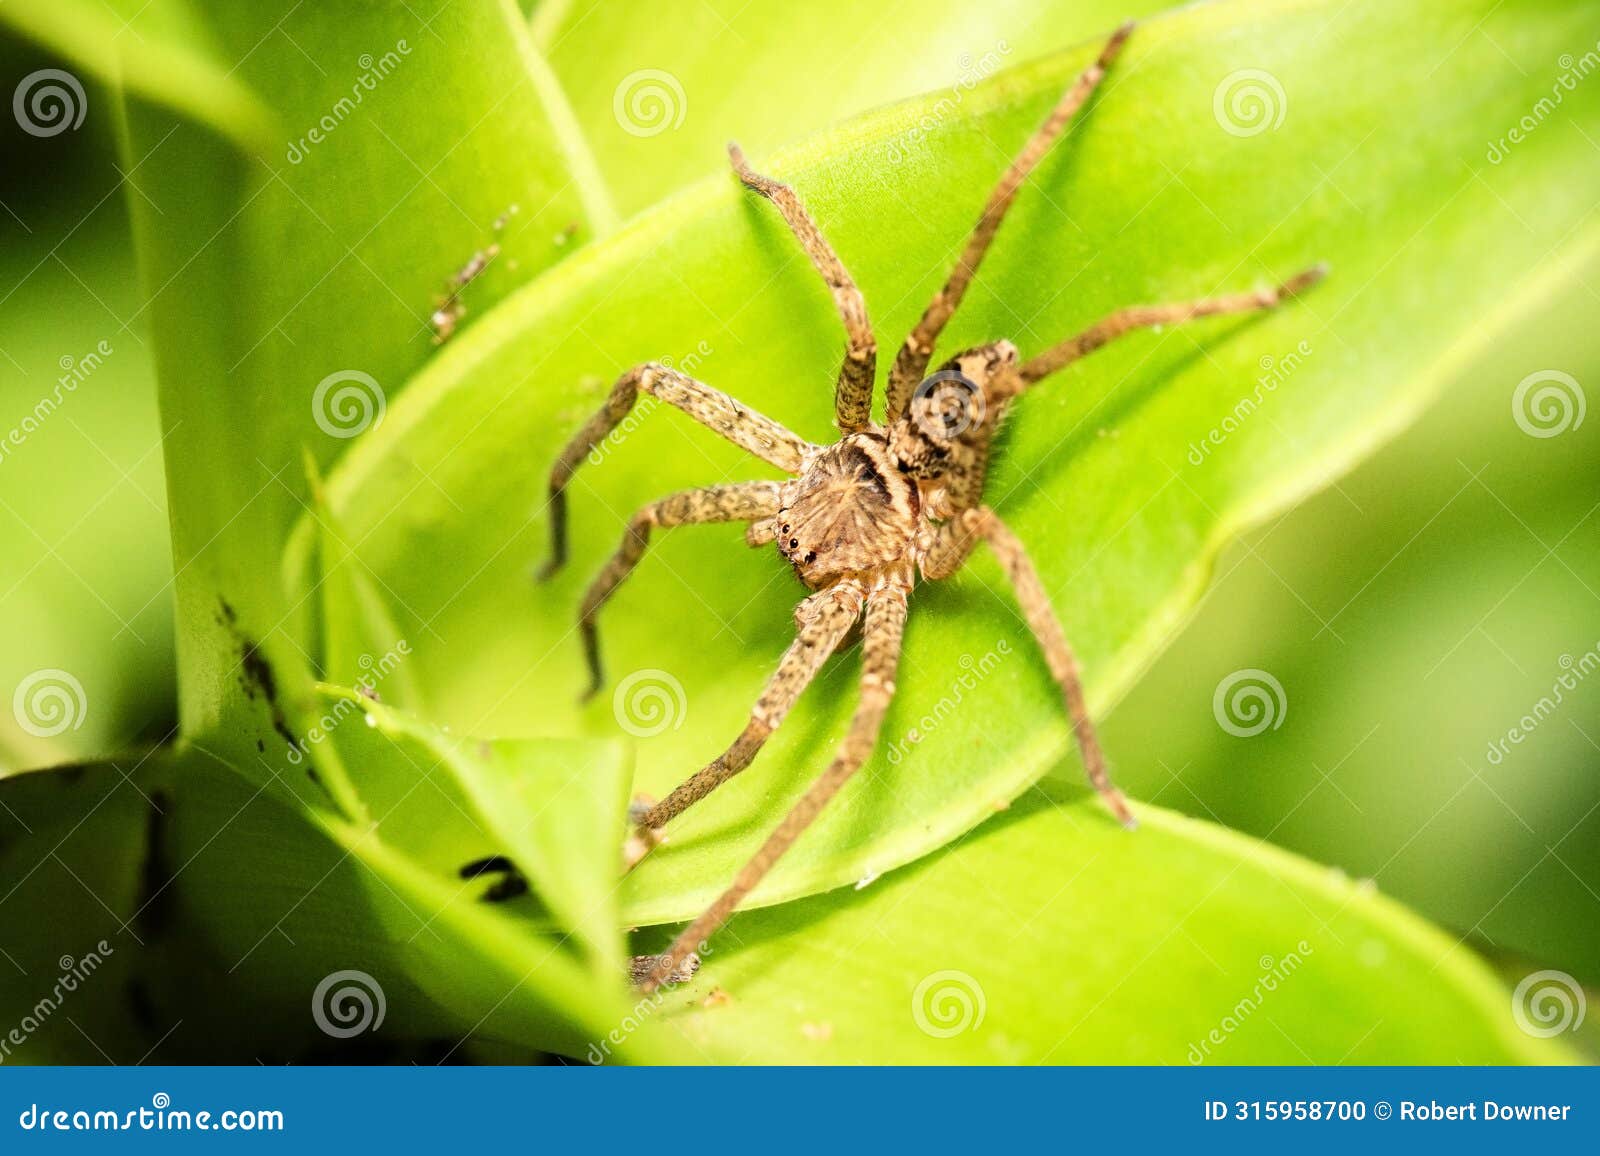 australian huntsman spider